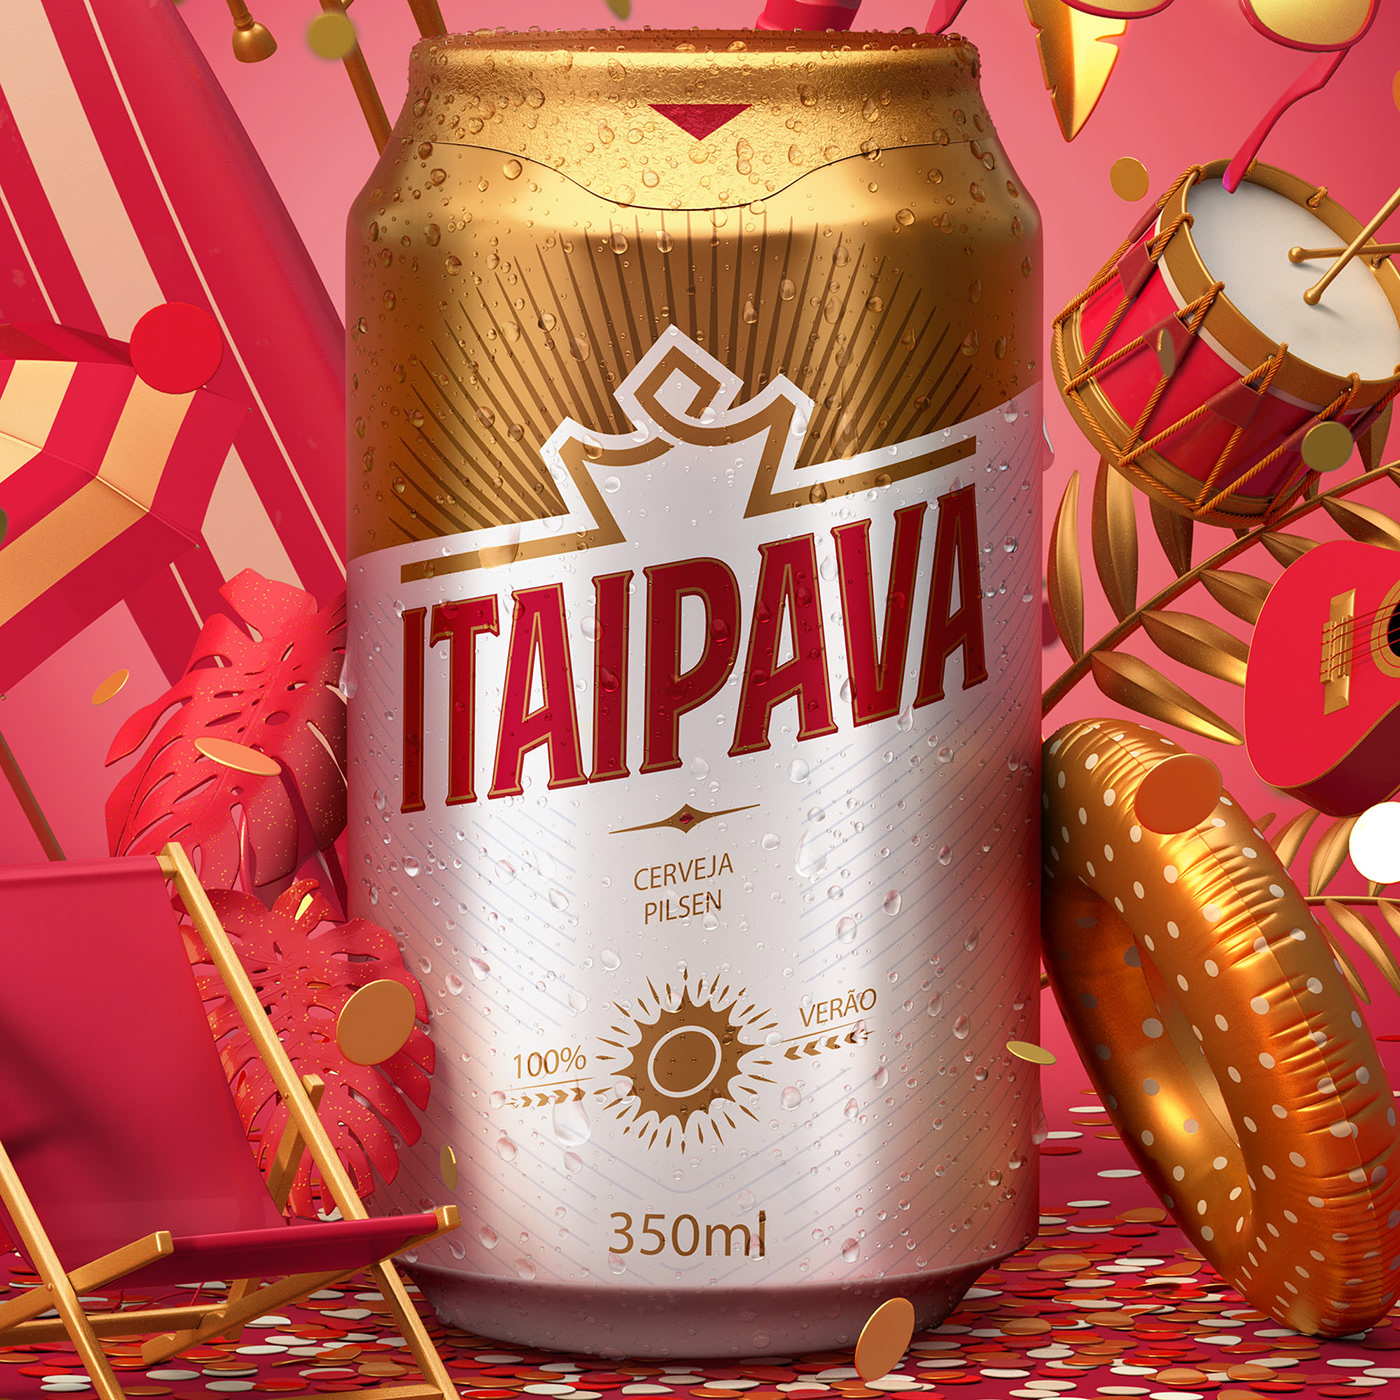 beach beer Carnaval Cerveja confete gold itaipava music red serpentina